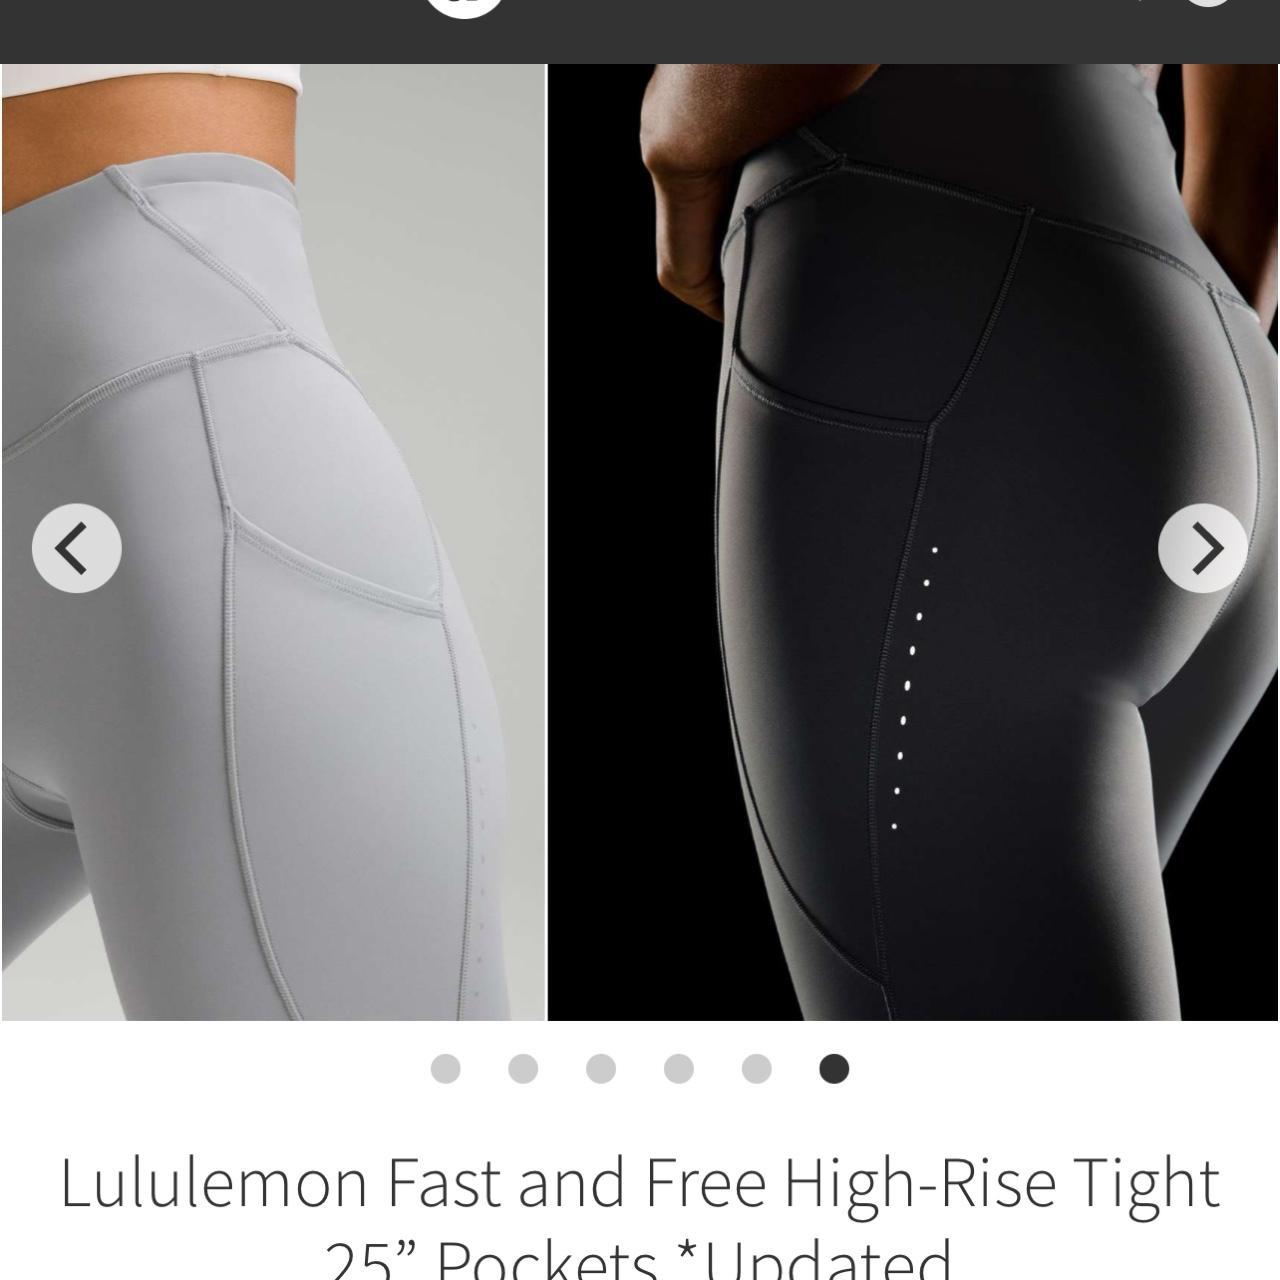 New Lululemon Fast Free High-Rise Tight 25” Pockets - Depop